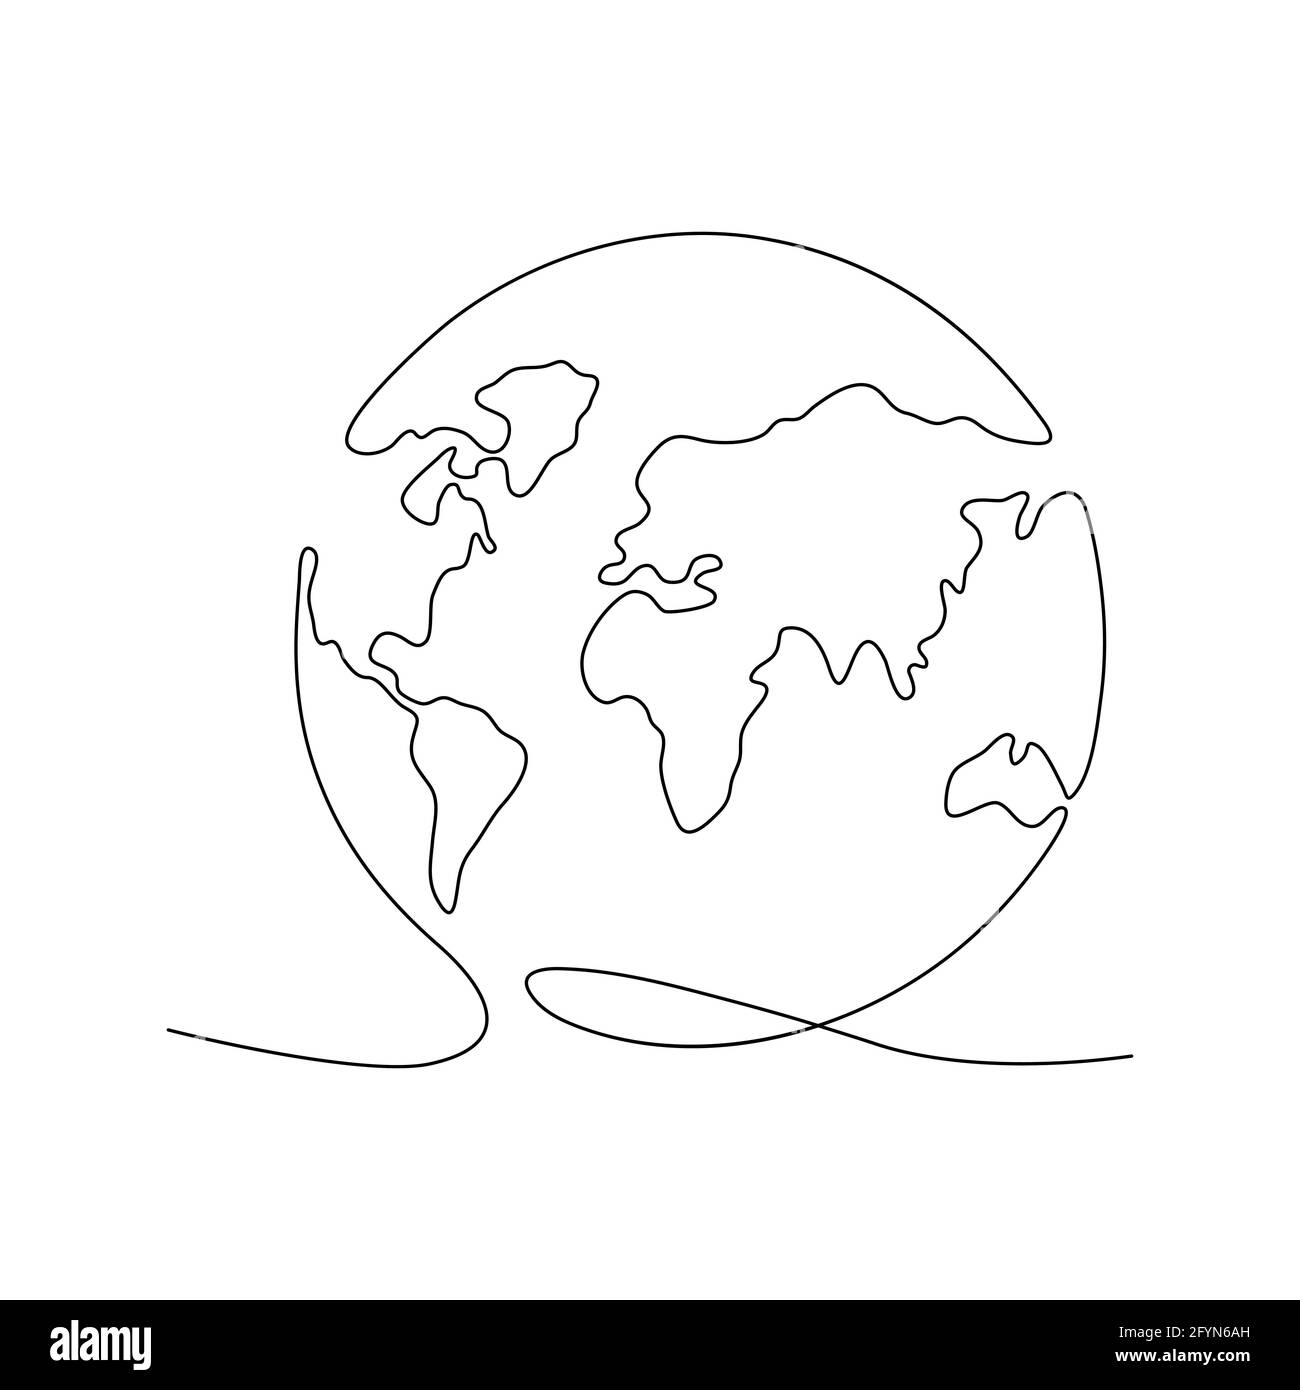 https://c8.alamy.com/comp/2FYN6AH/continuous-earth-line-drawing-symbol-world-map-one-line-art-earth-globe-hand-drawn-insignia-2FYN6AH.jpg